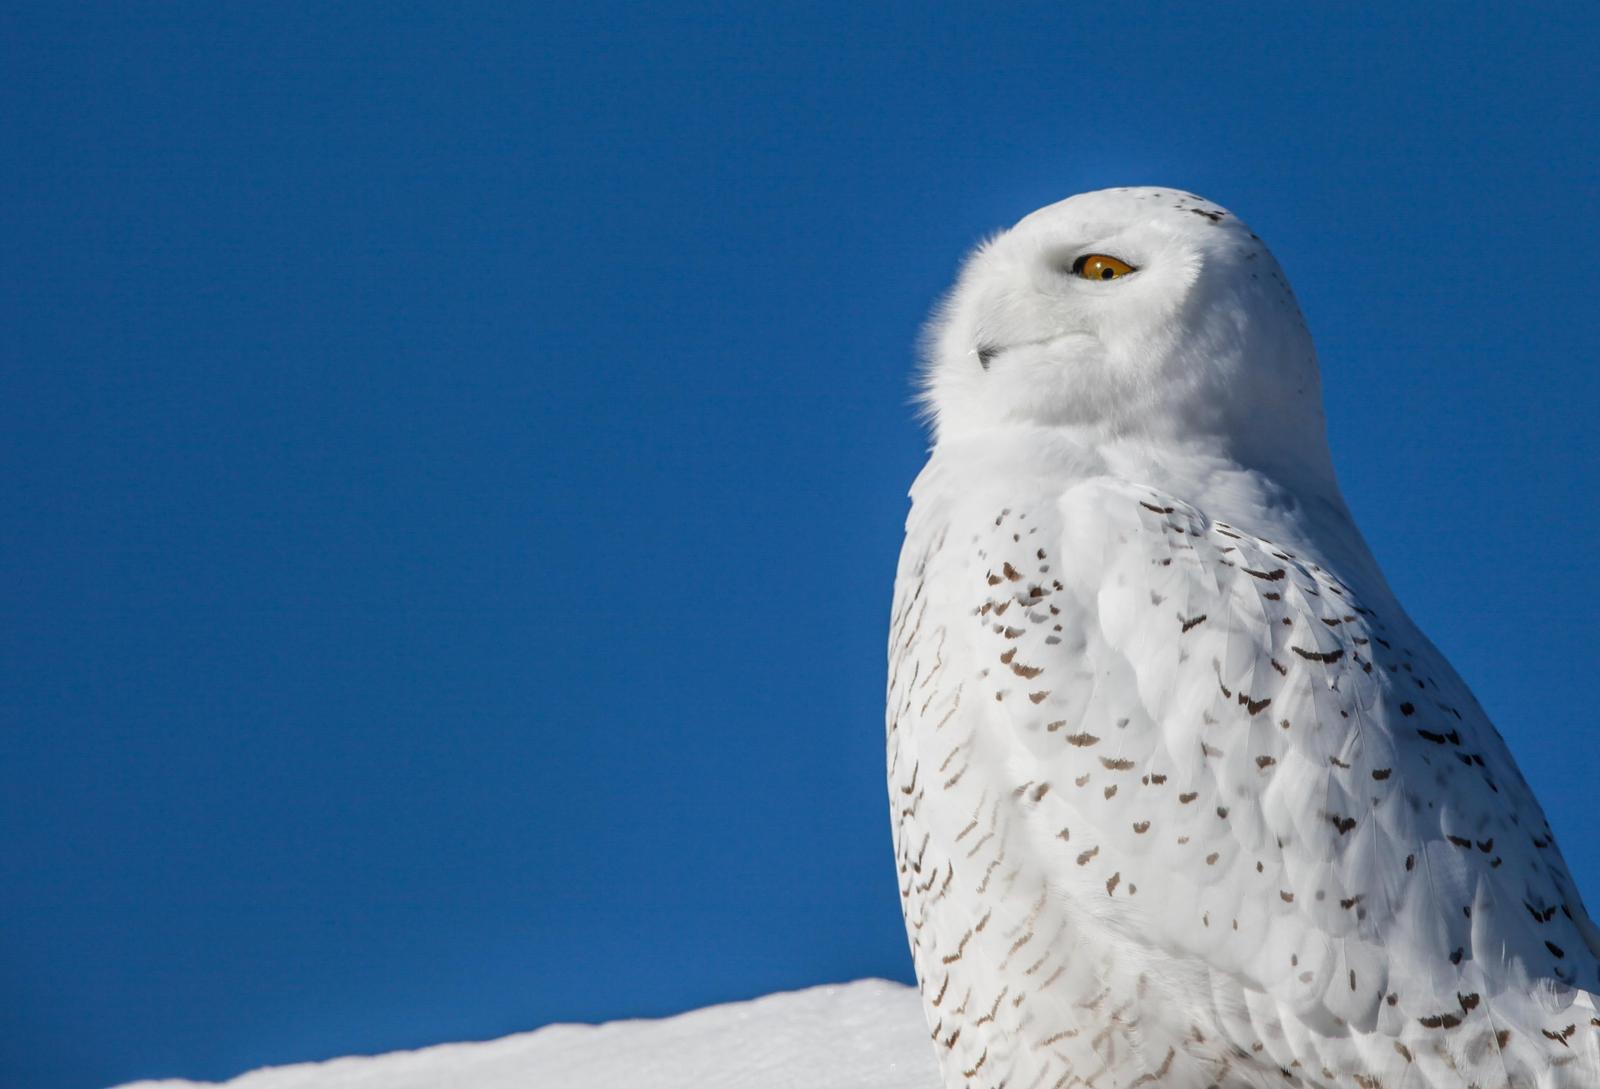 Snowy Owl Photo by Lucy Wightman